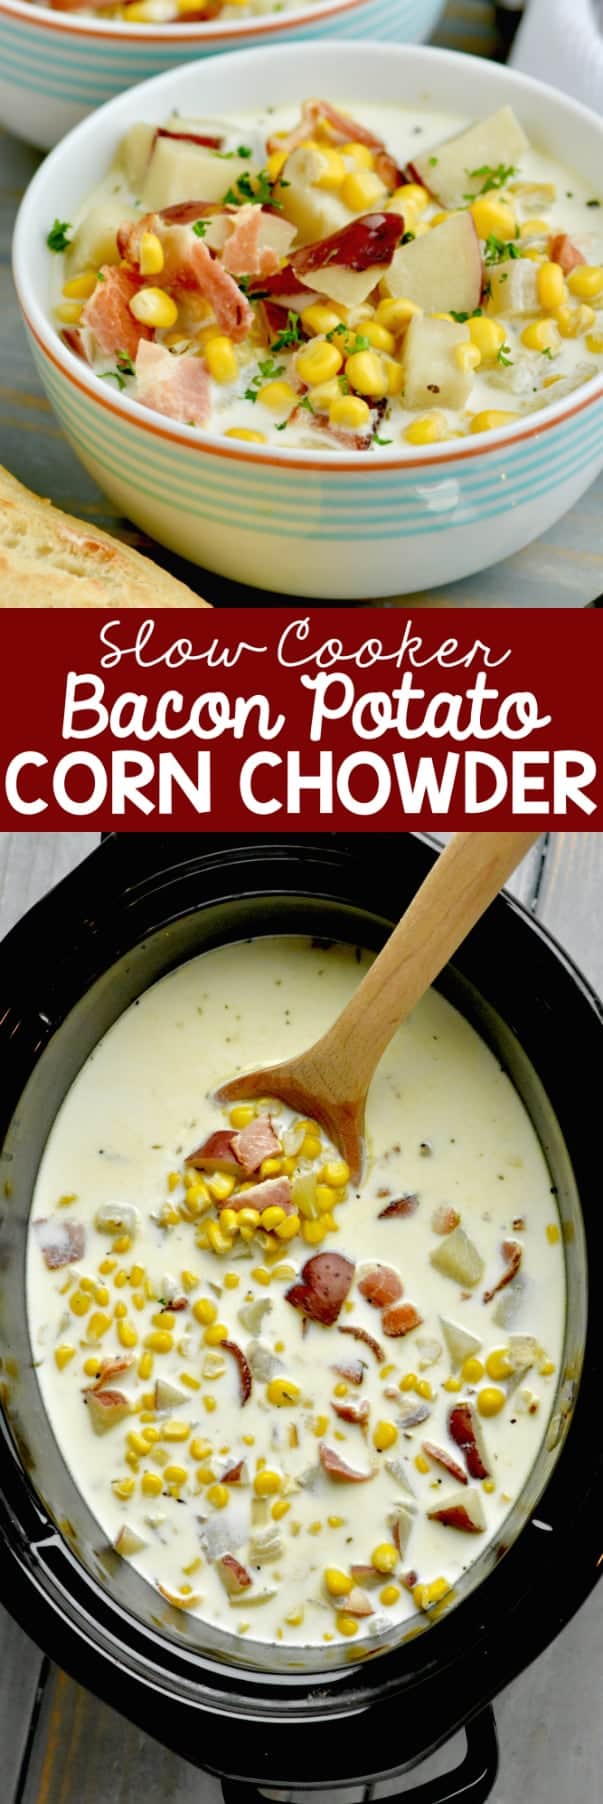 The Slow Cooker Bacon Potato Corn Chowder has a creamy smooth base. 